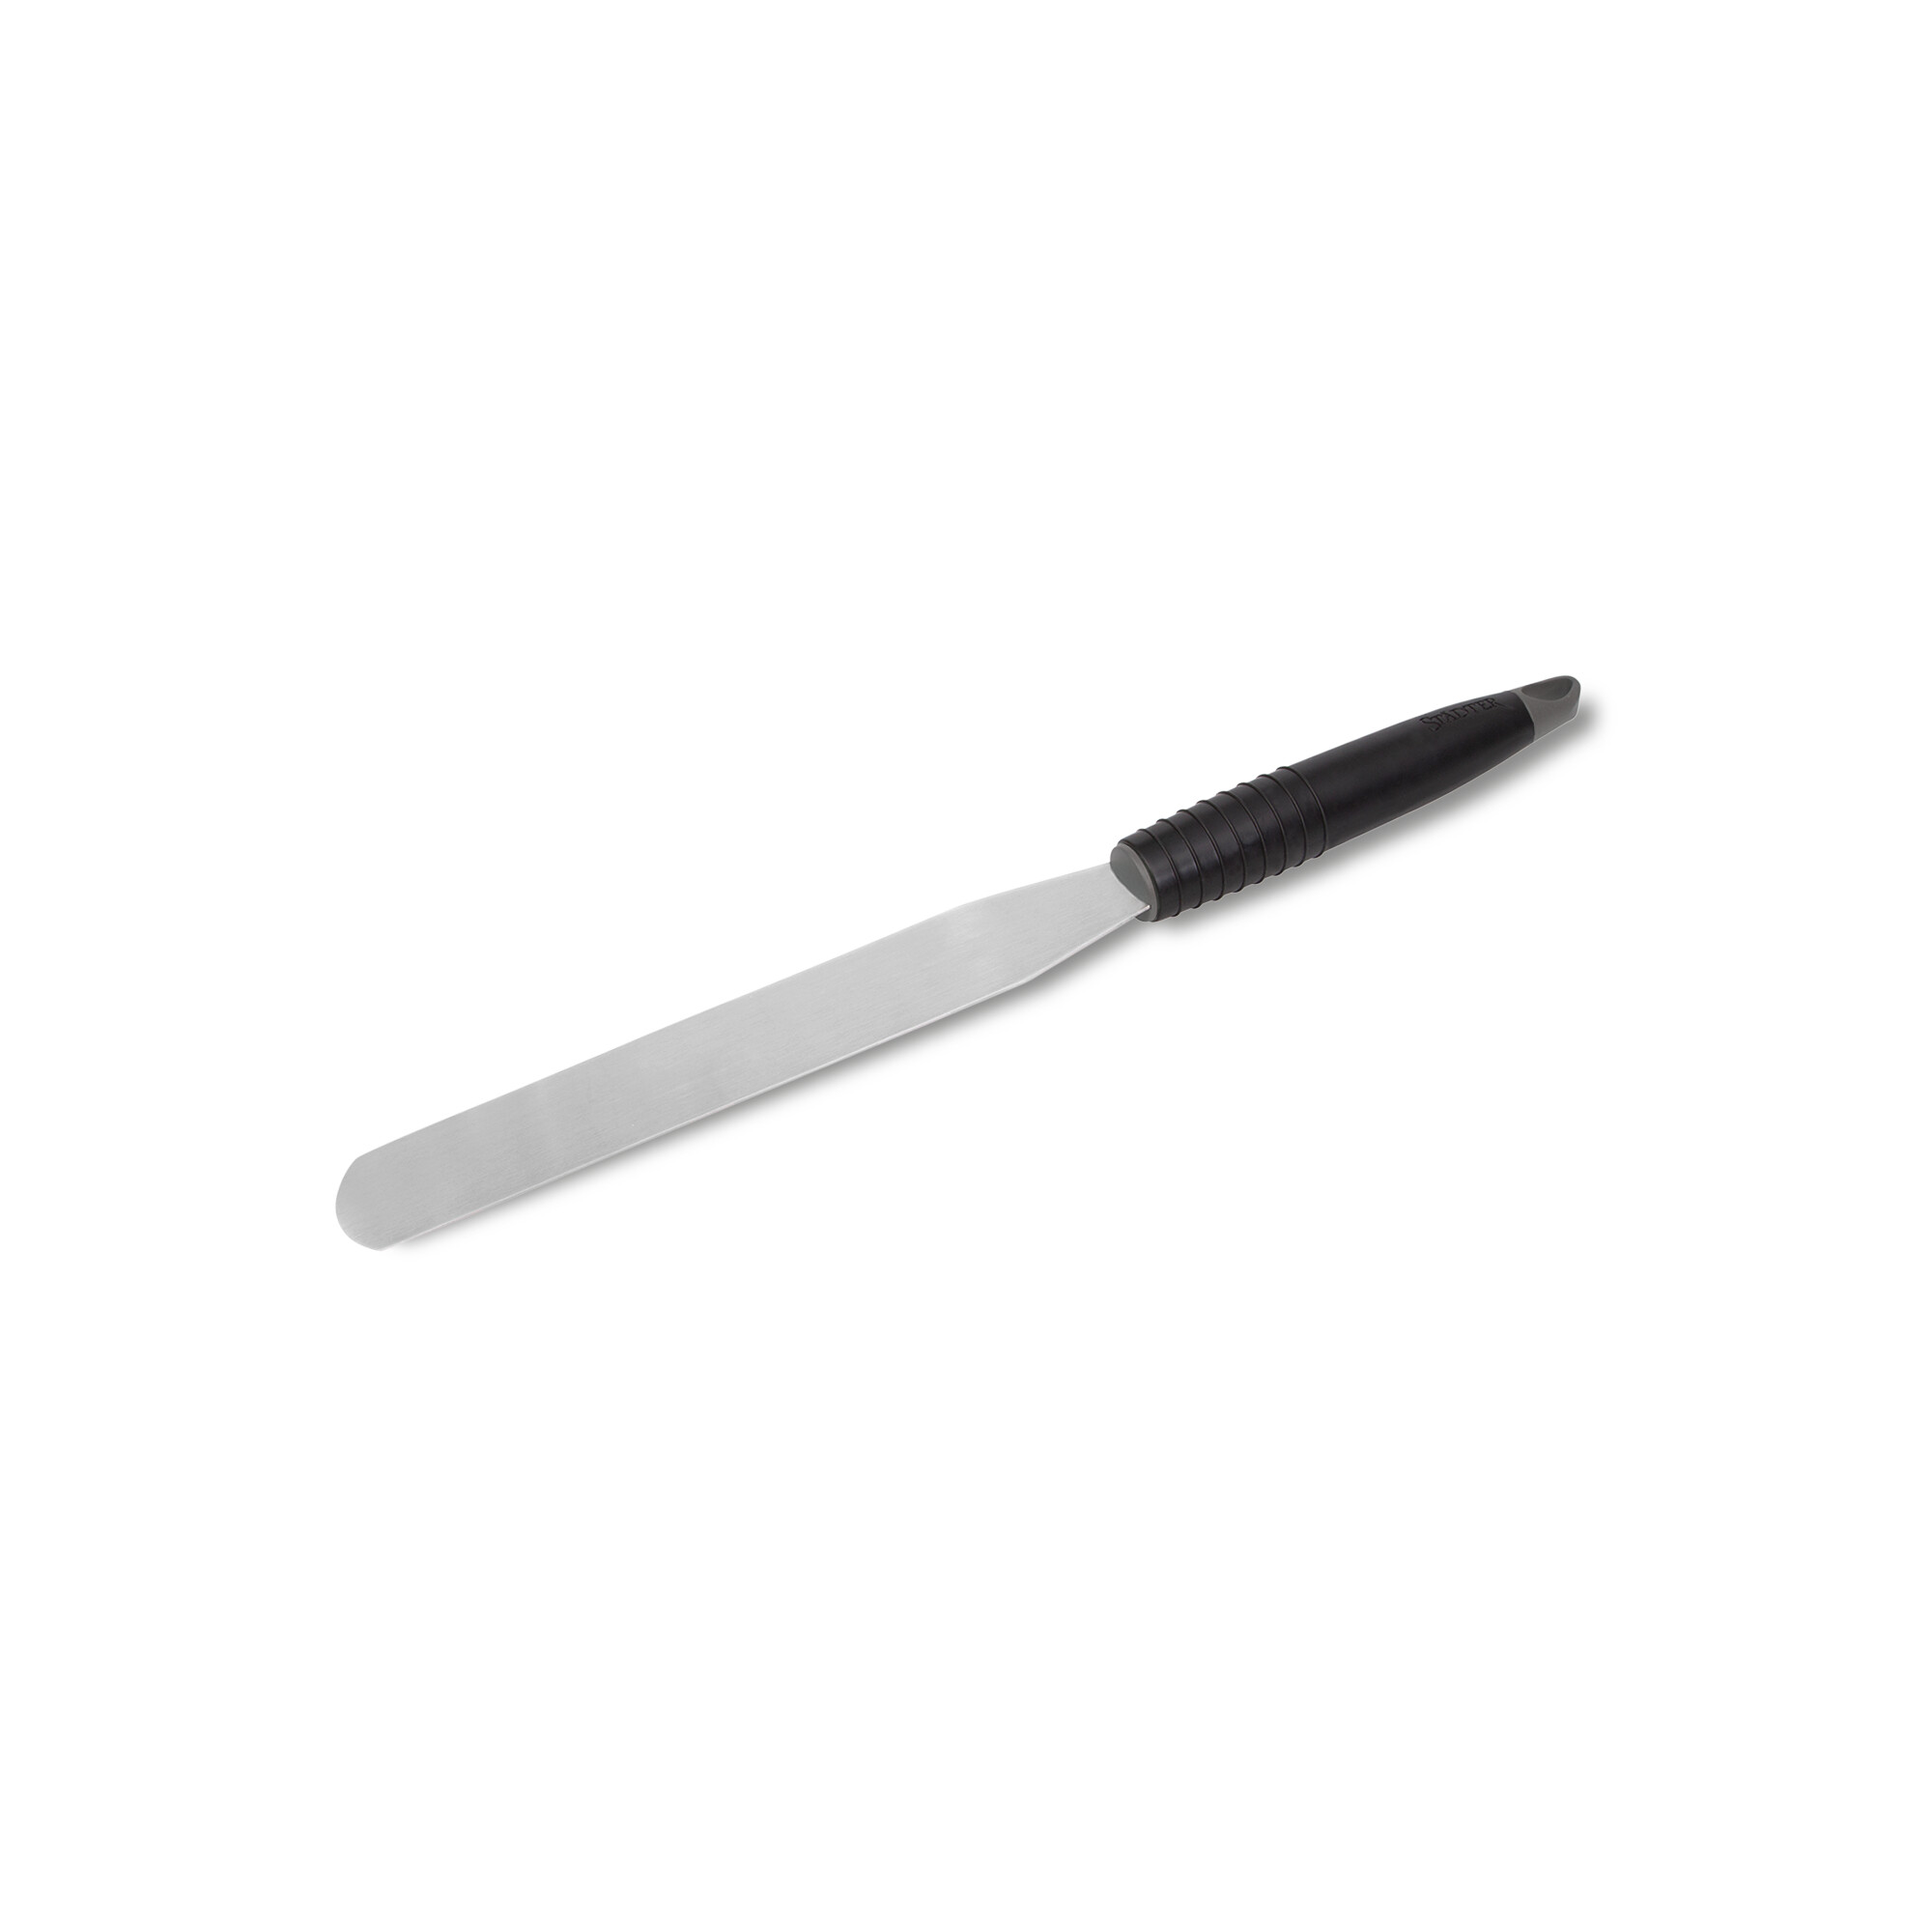 Icing spatula - straight